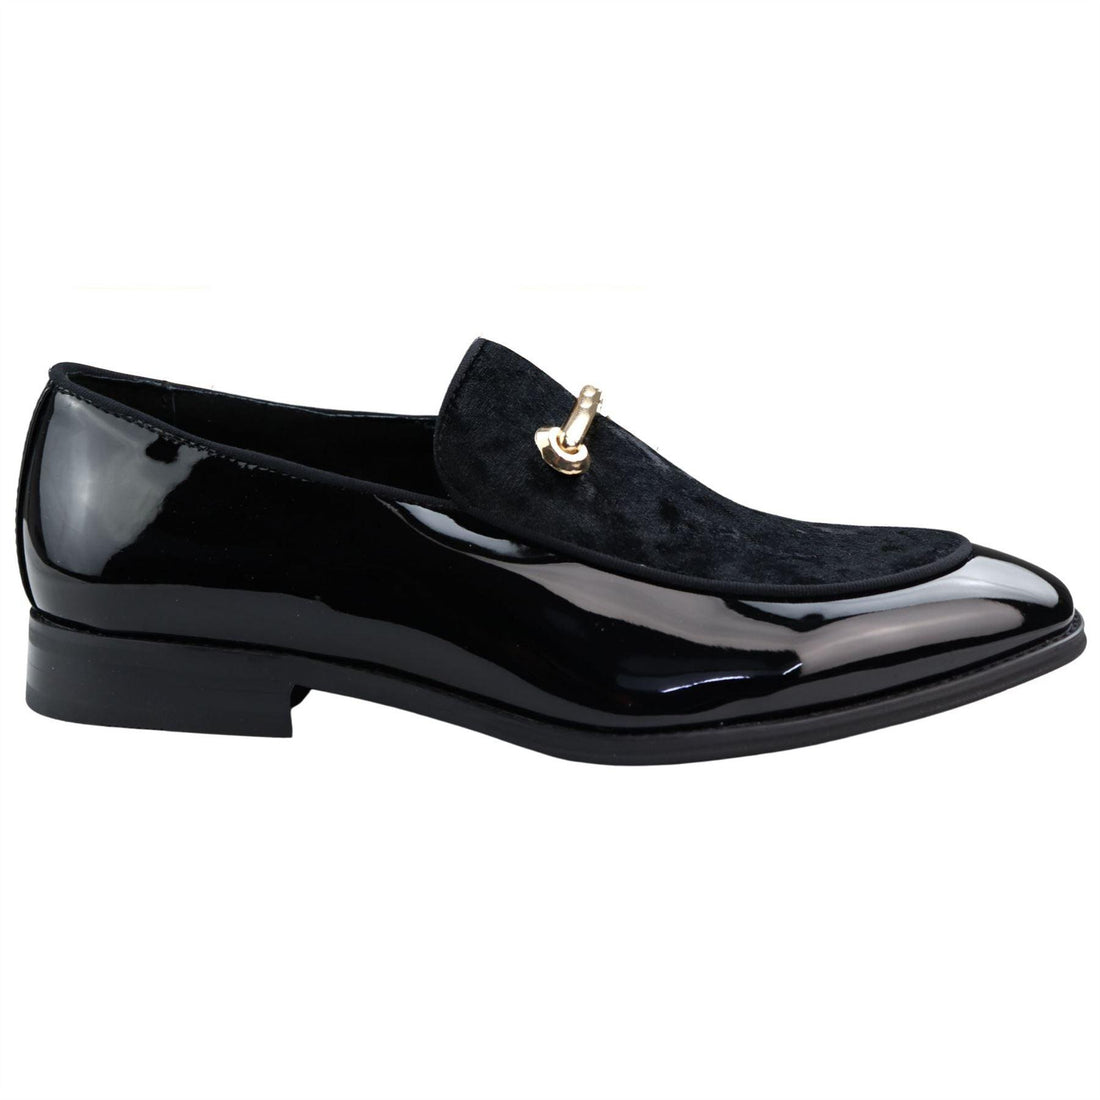 Men's Moccasin Loafers Shoes Leather Lined Slip On Velvet Smart Formal Shoe Black Blue Red - Knighthood Store